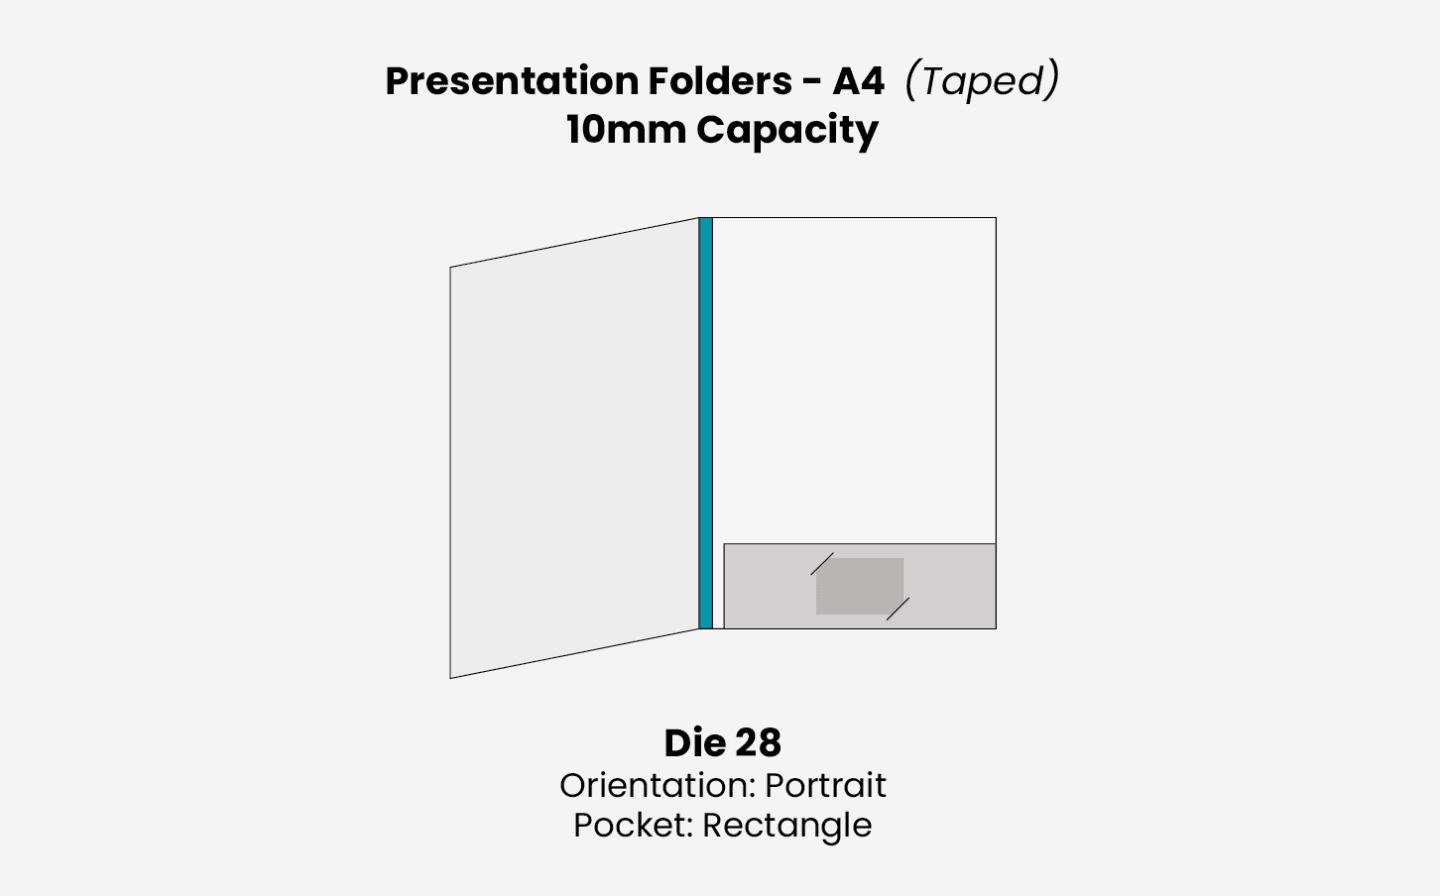 A4 Presentation Folder - Taped - 10mm Capacity